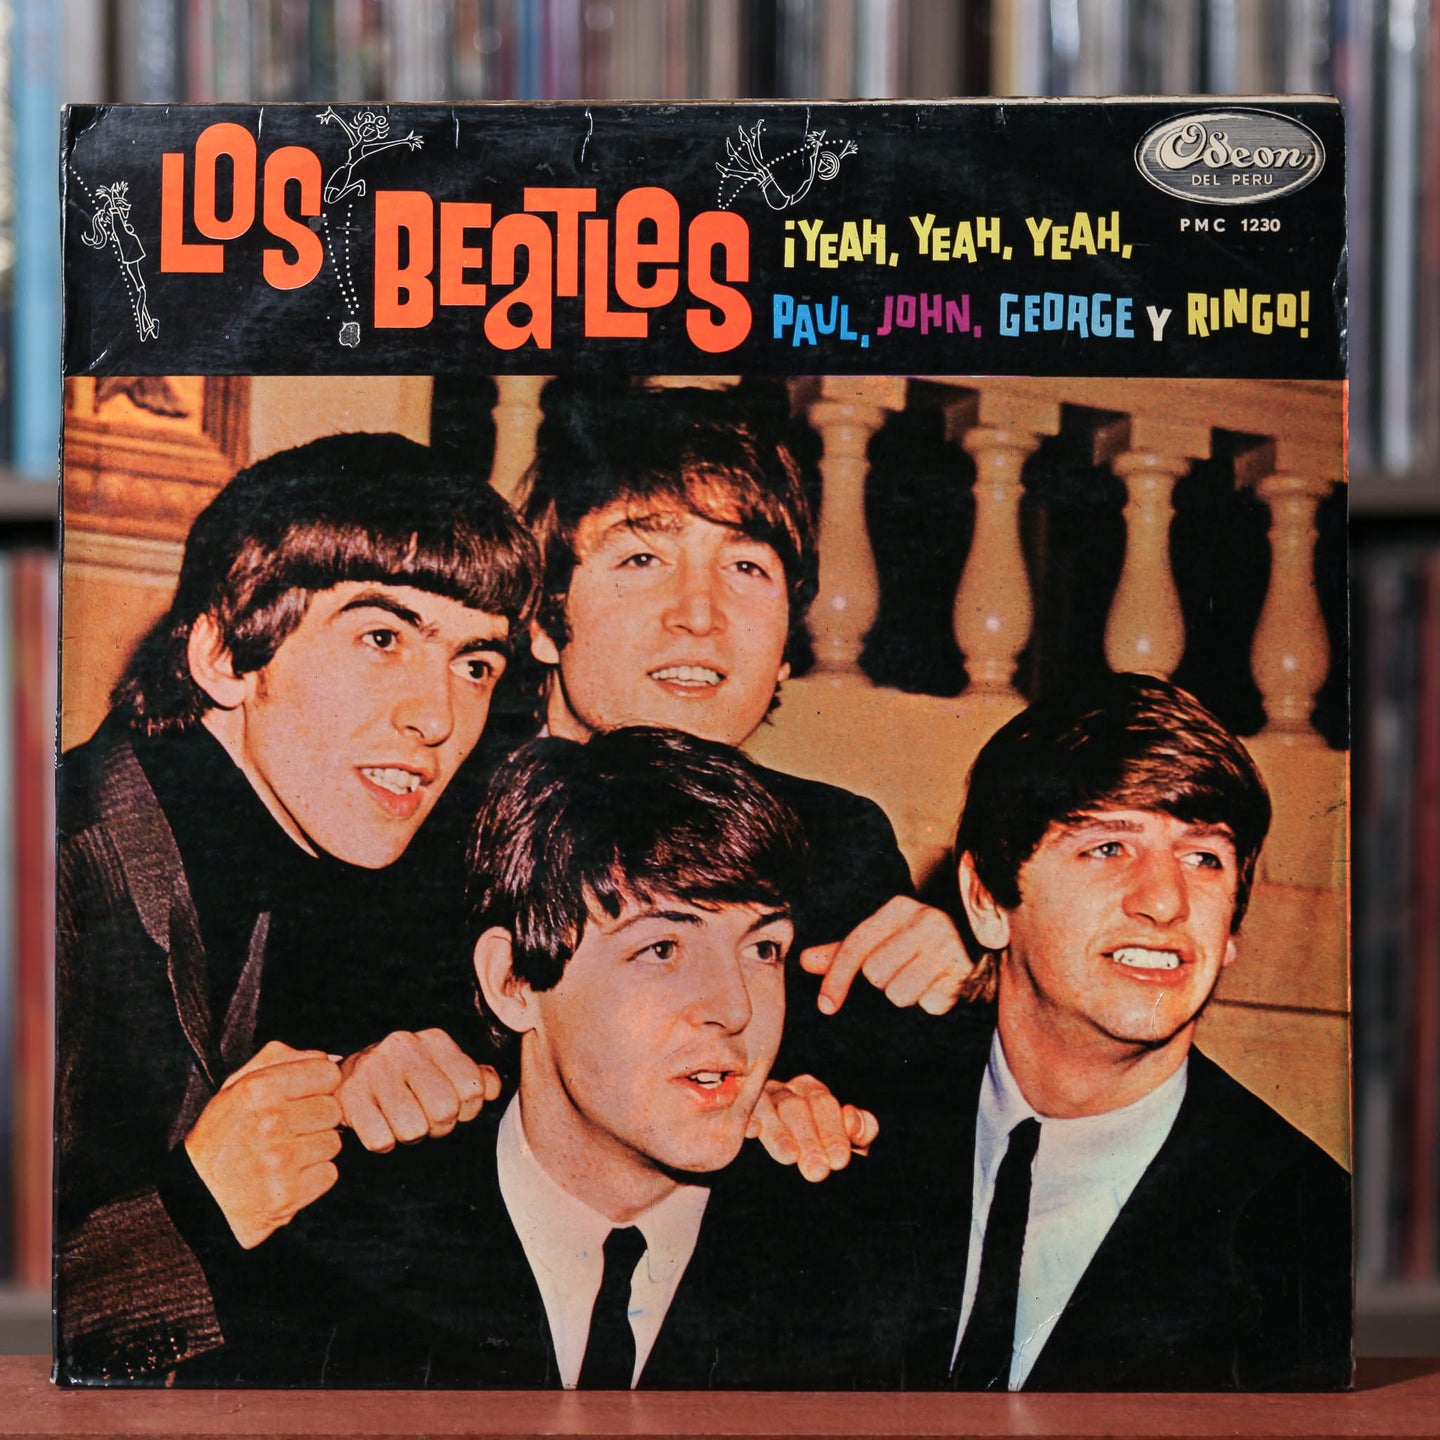 The Beatles - Yeah, Yeah, Yeah, Paul, John, George Y Ringo - RARE Peruvian Import - 1966 Odeon Del Peru, VG/VG